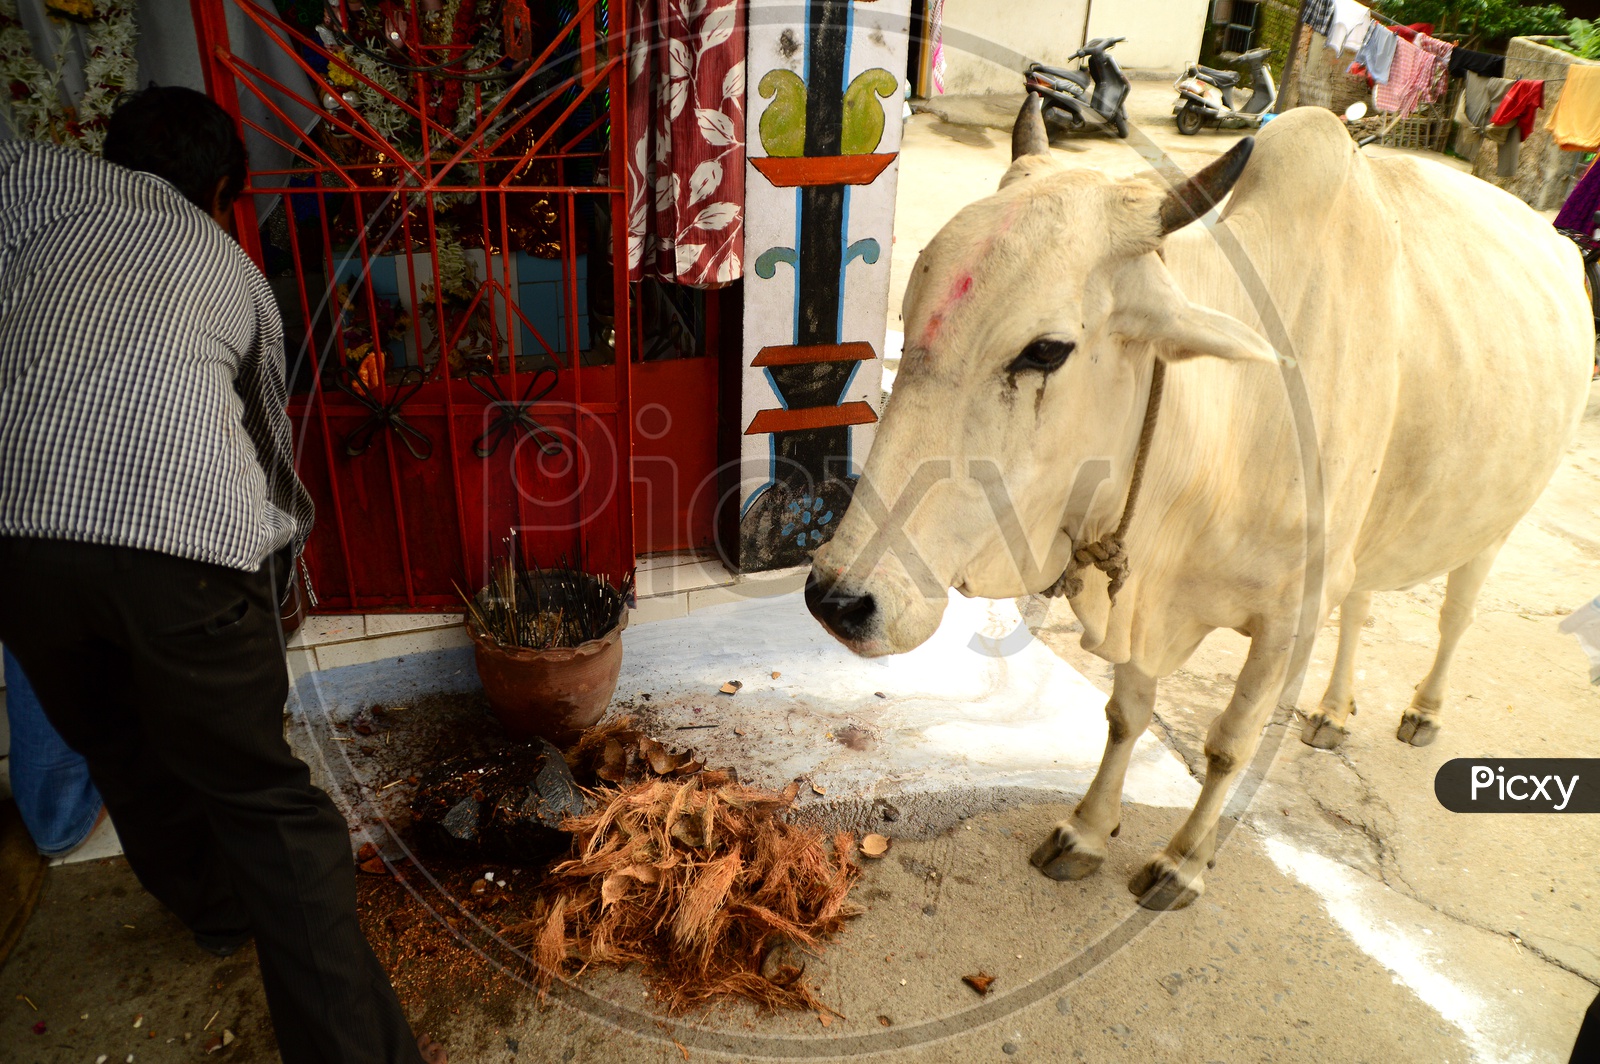 A Sacred cow alongside the temple